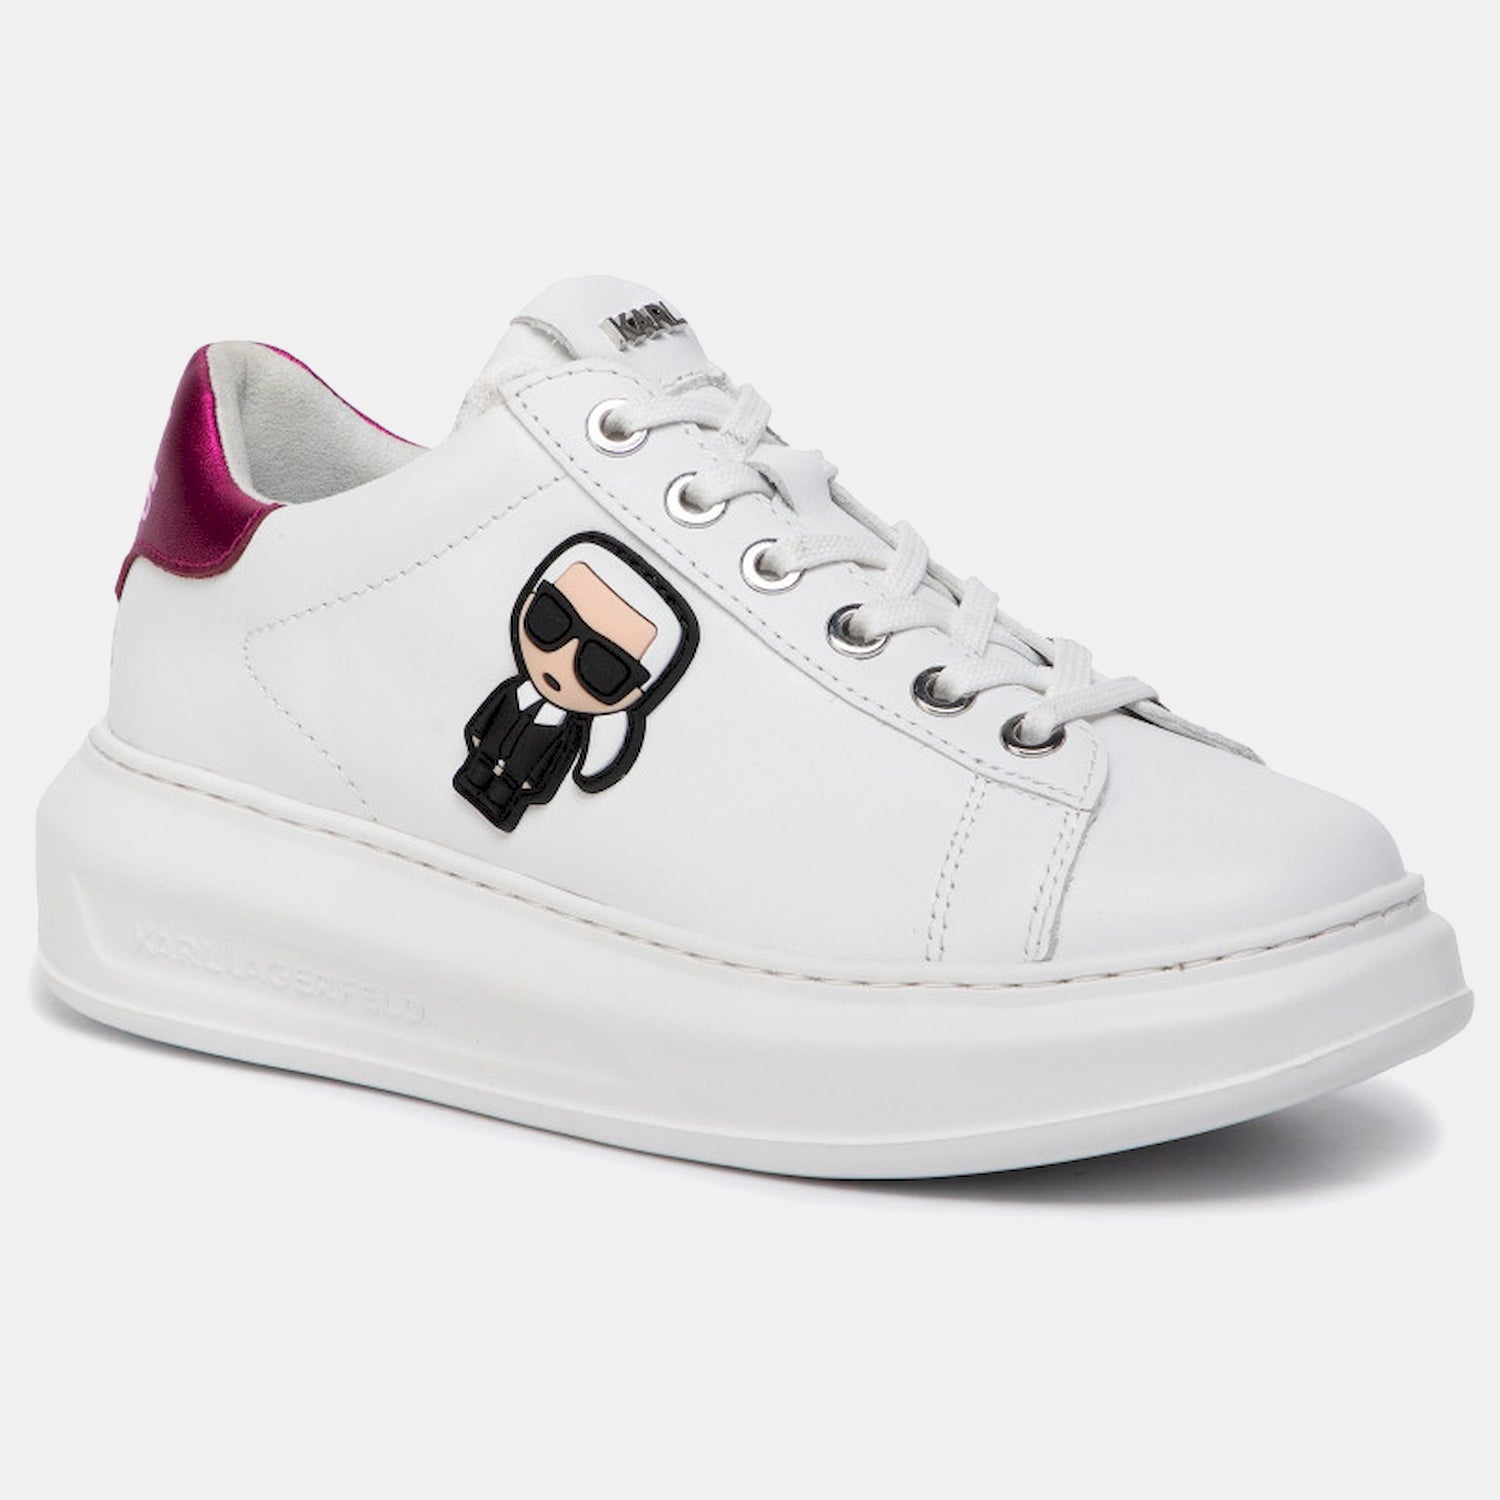 Karl Lagerfeld Sapatilhas Sneakers Shoes Kl62530 Whi Pink Branco Rosa_shot1